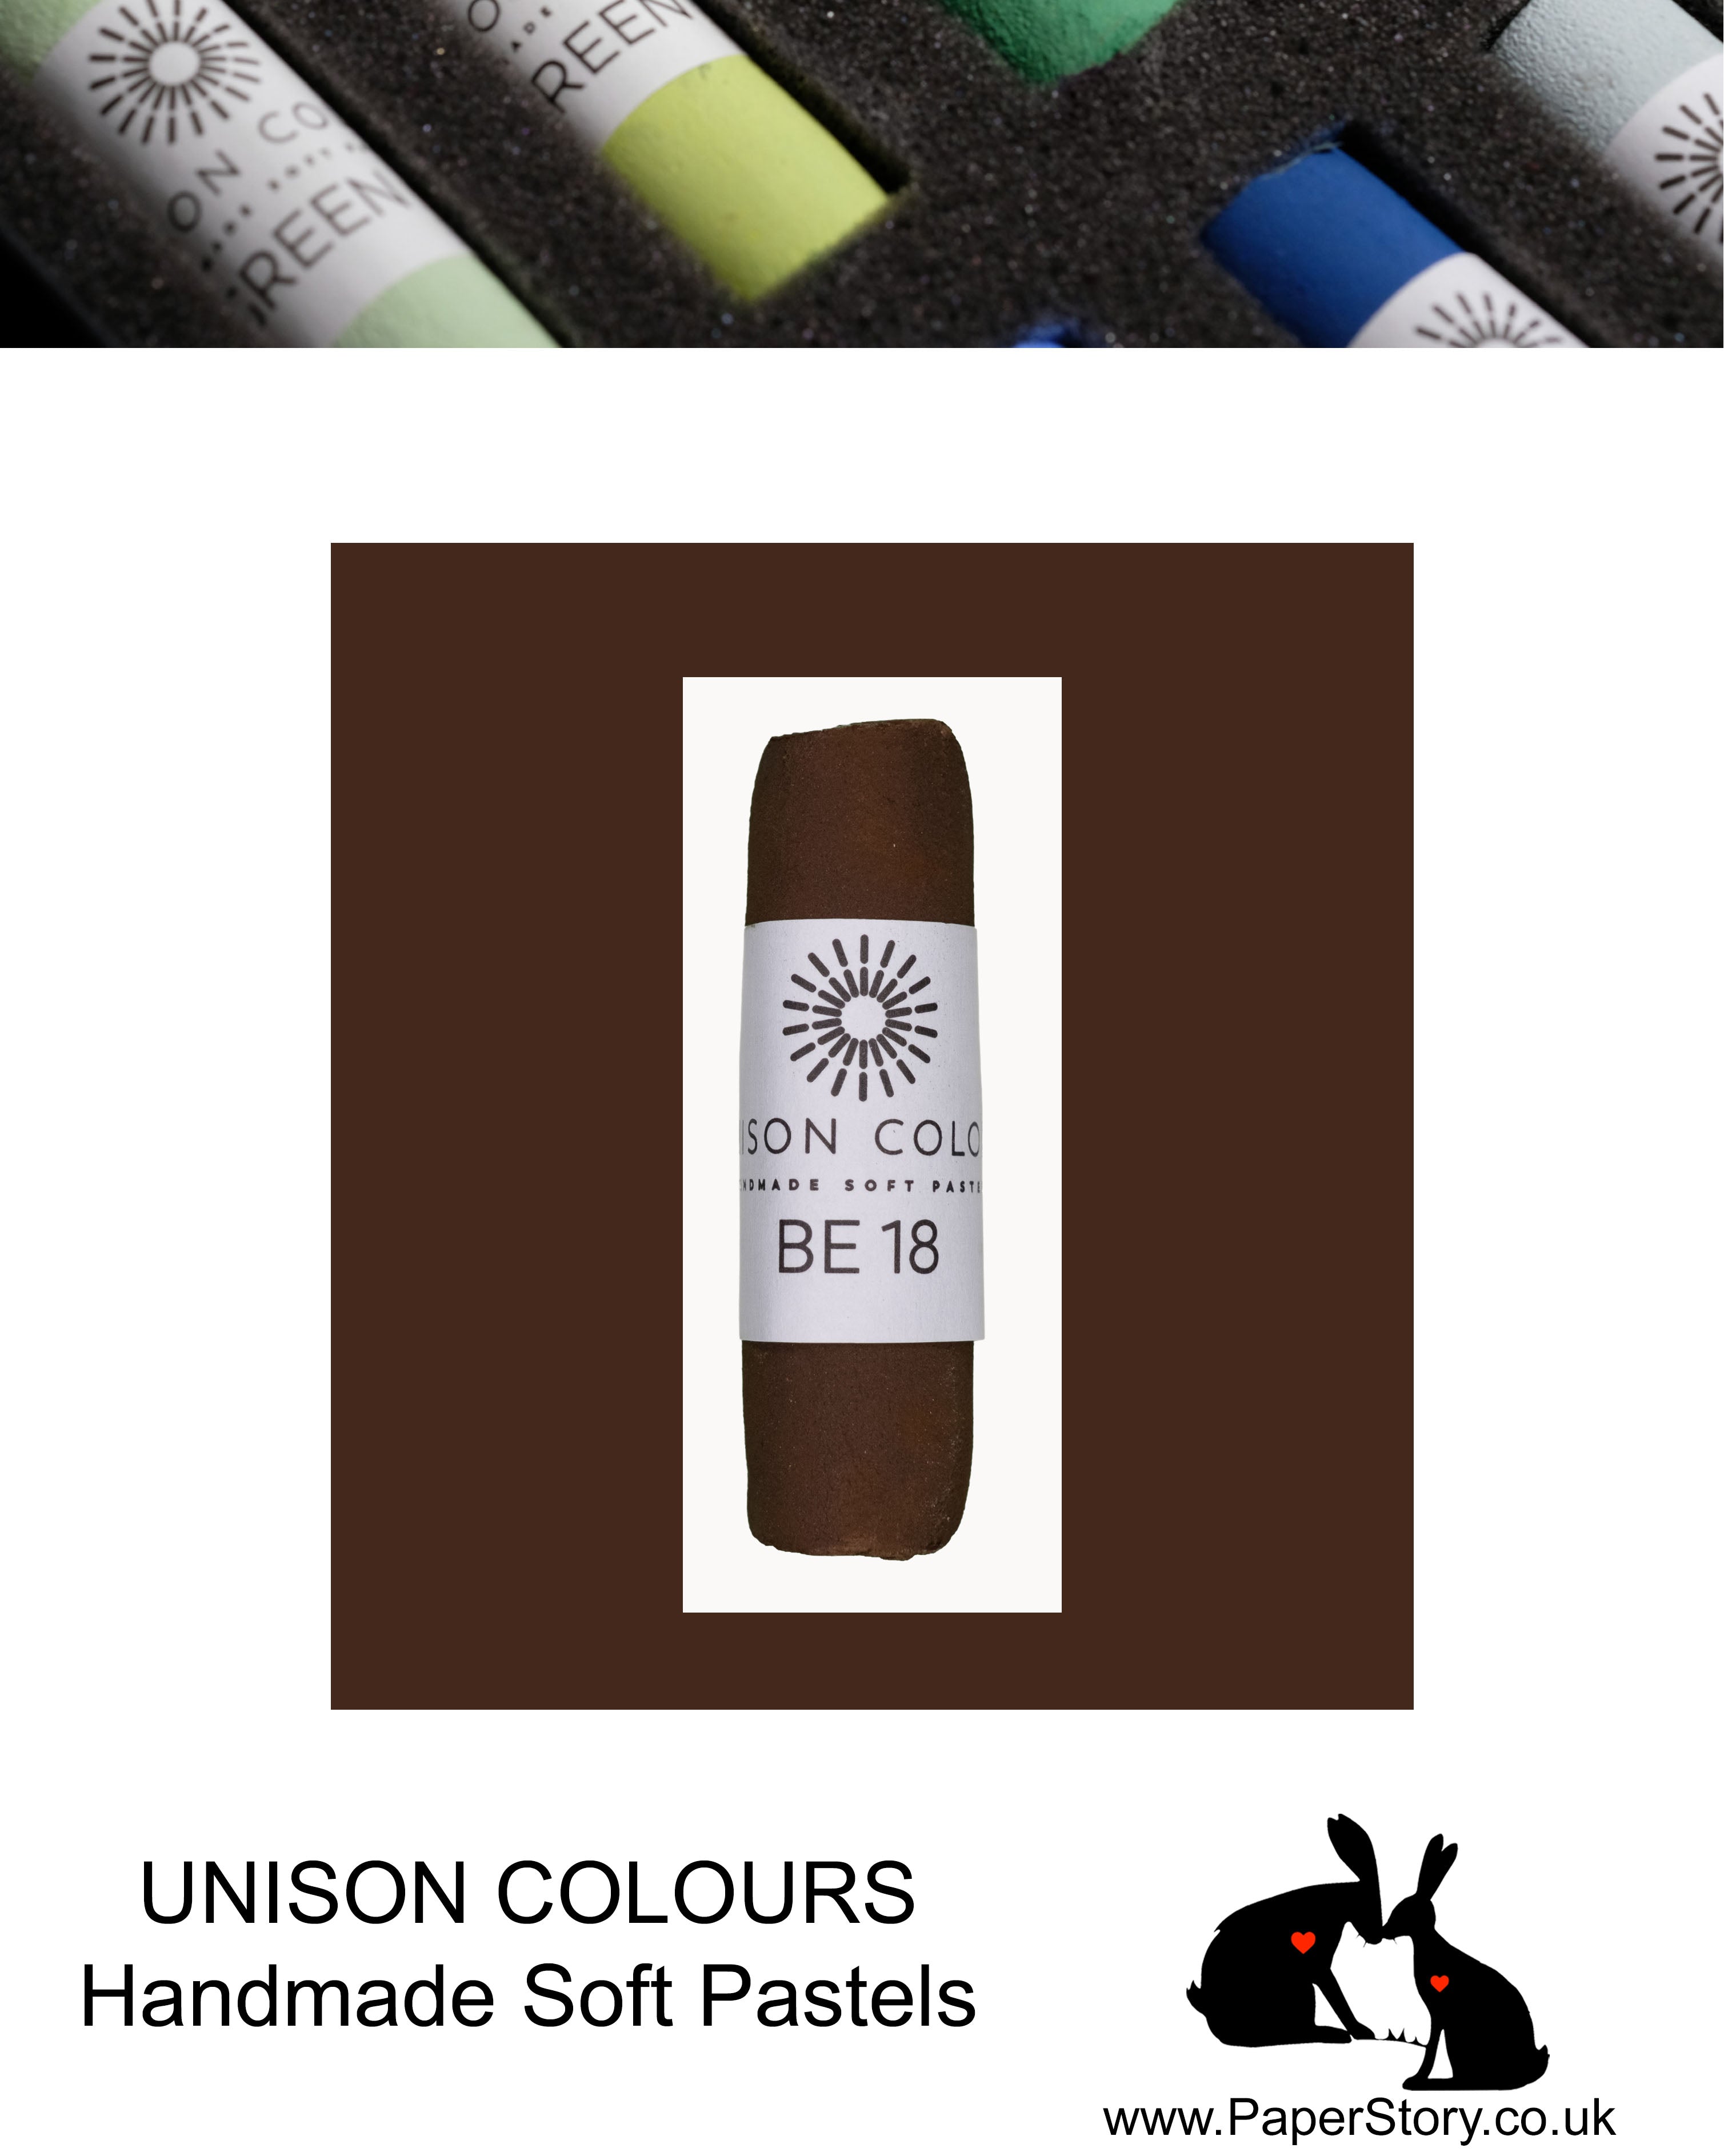 Unison Colour Handmade Soft Pastels Brown Earth 18 - Size Regular